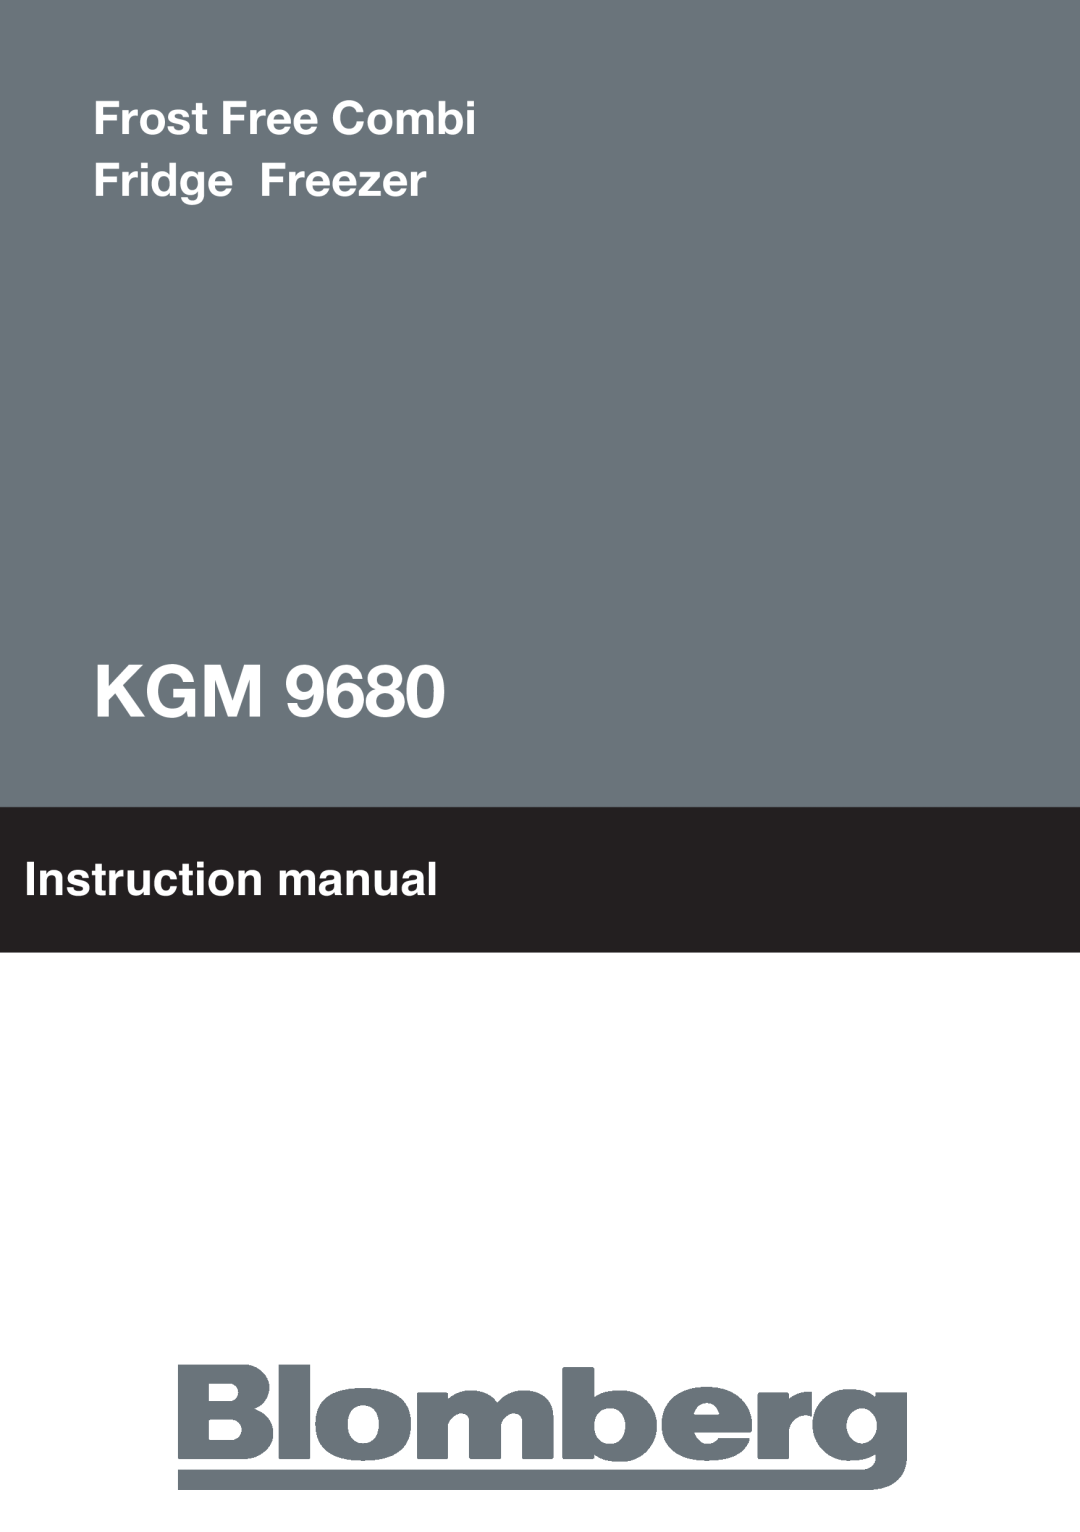 Blomberg KGM 9680 instruction manual Frost Free Combi Fridge Freezer, Instruction manual 